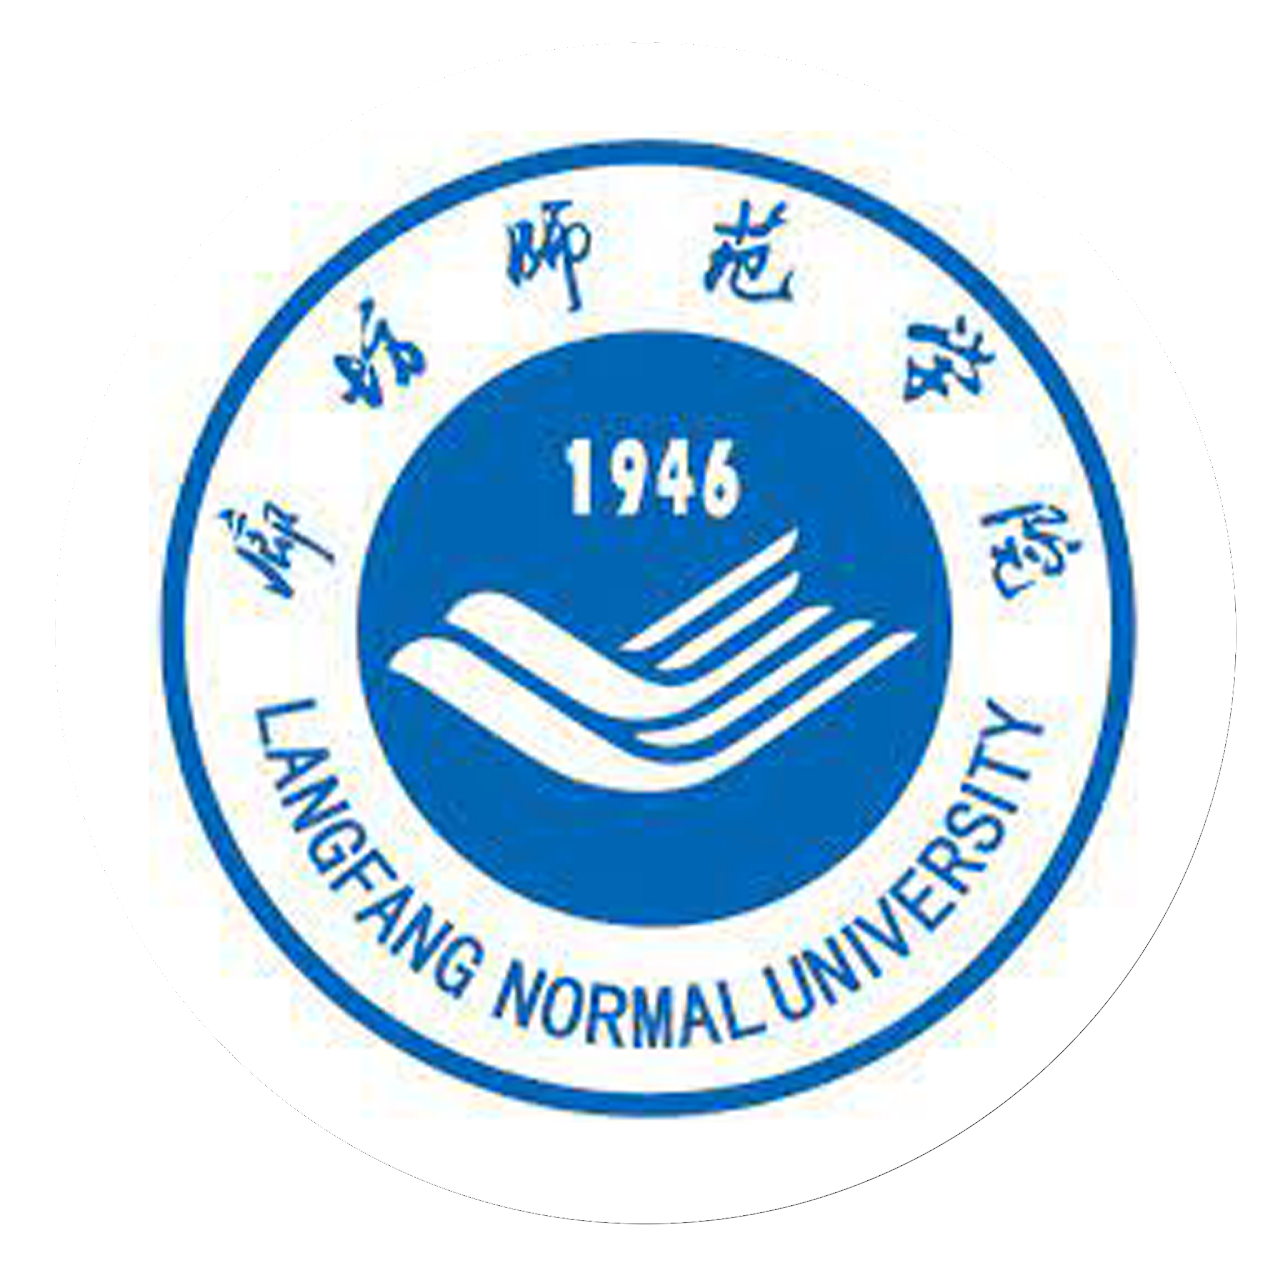 LangFang Normal University